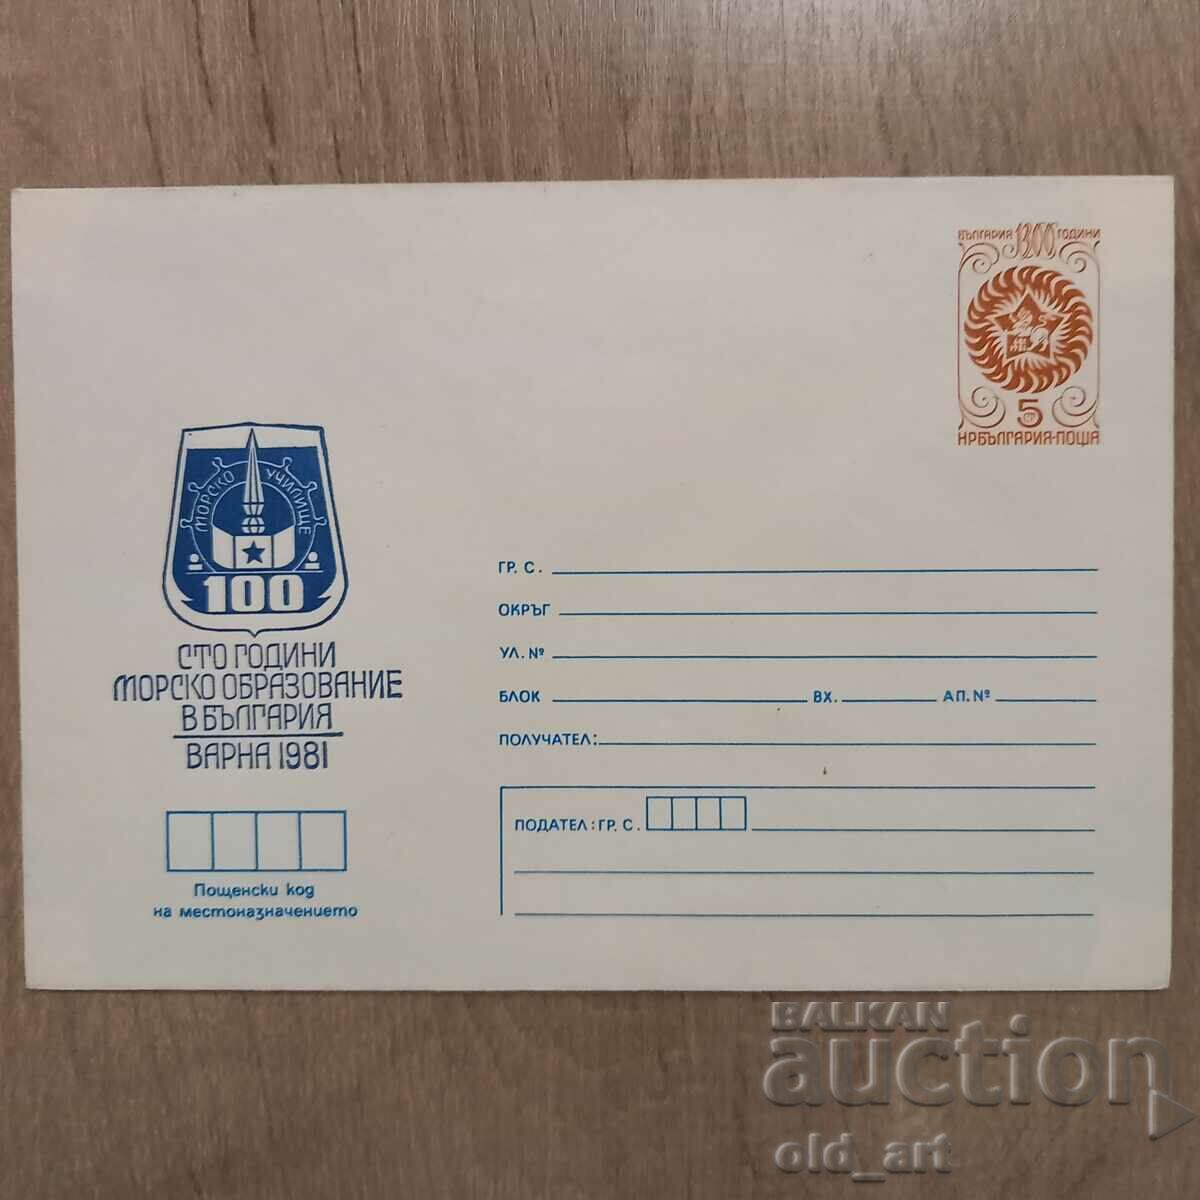 Mailing envelope - 100 years of maritime education in Bulgaria